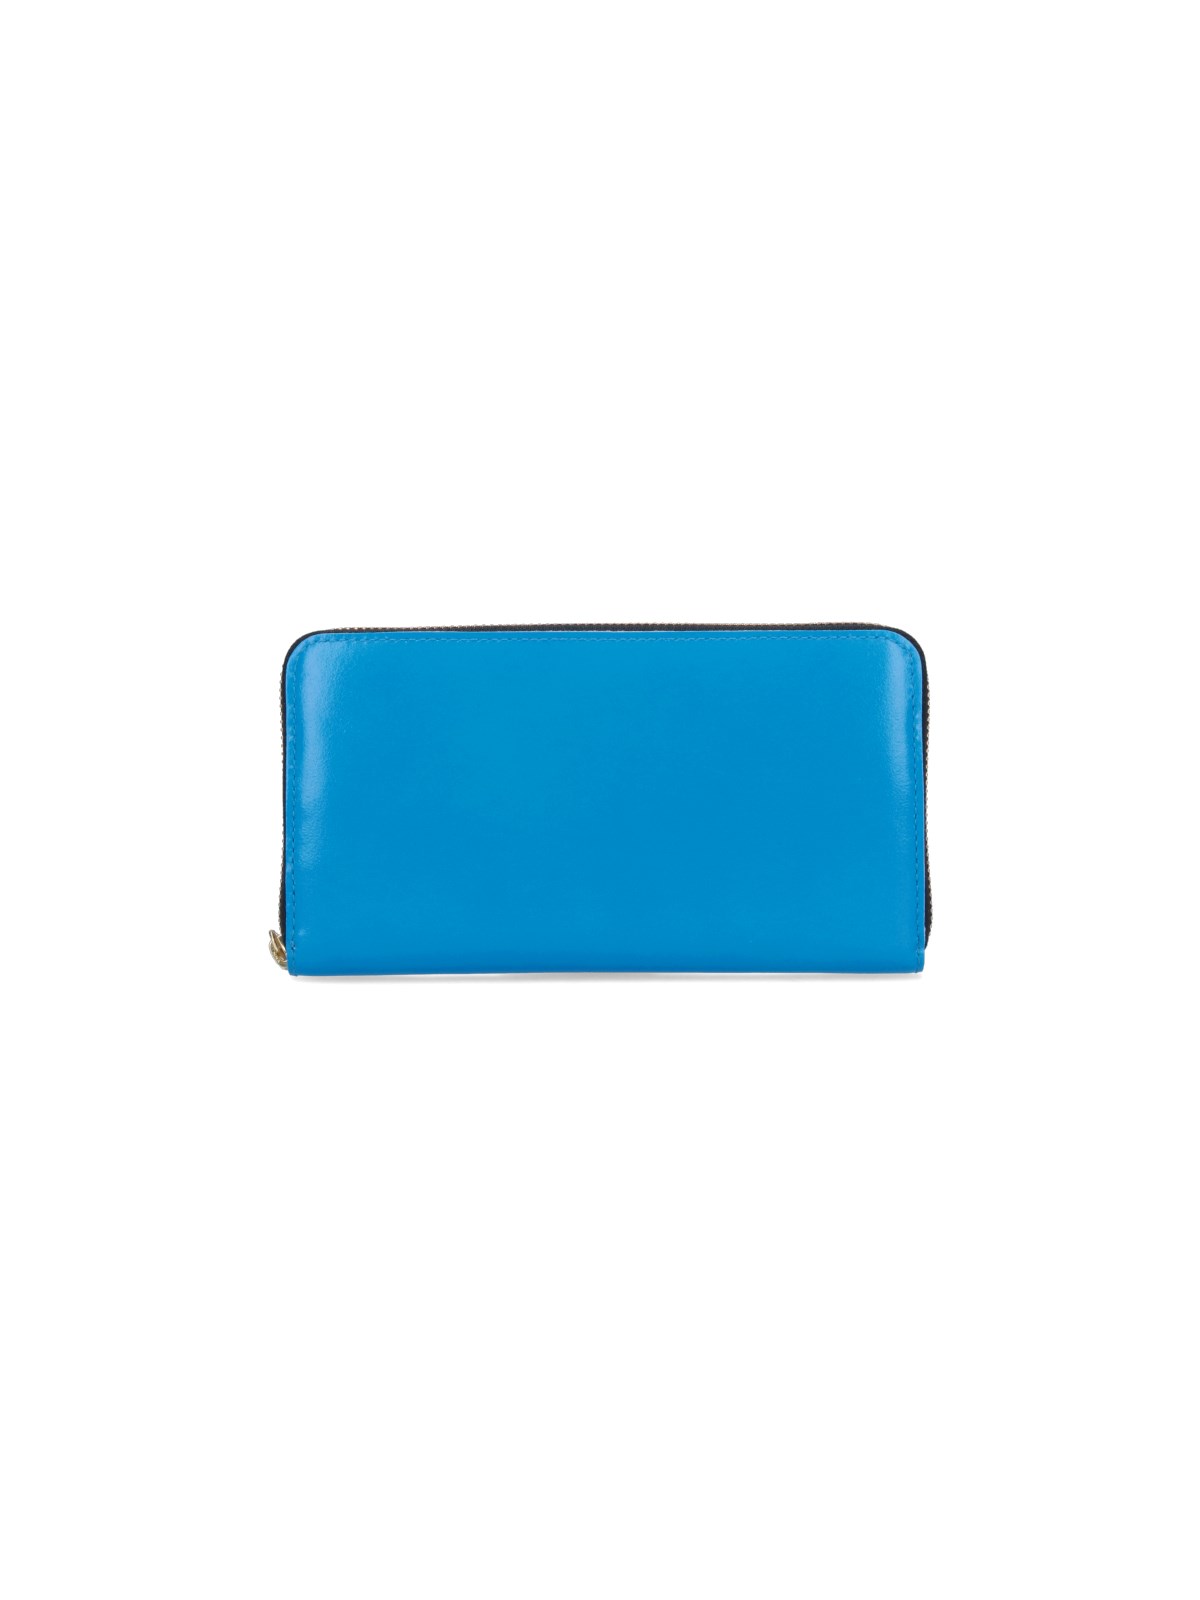 Comme Des Garçons Super Fluo Zipper Wallet In Blue